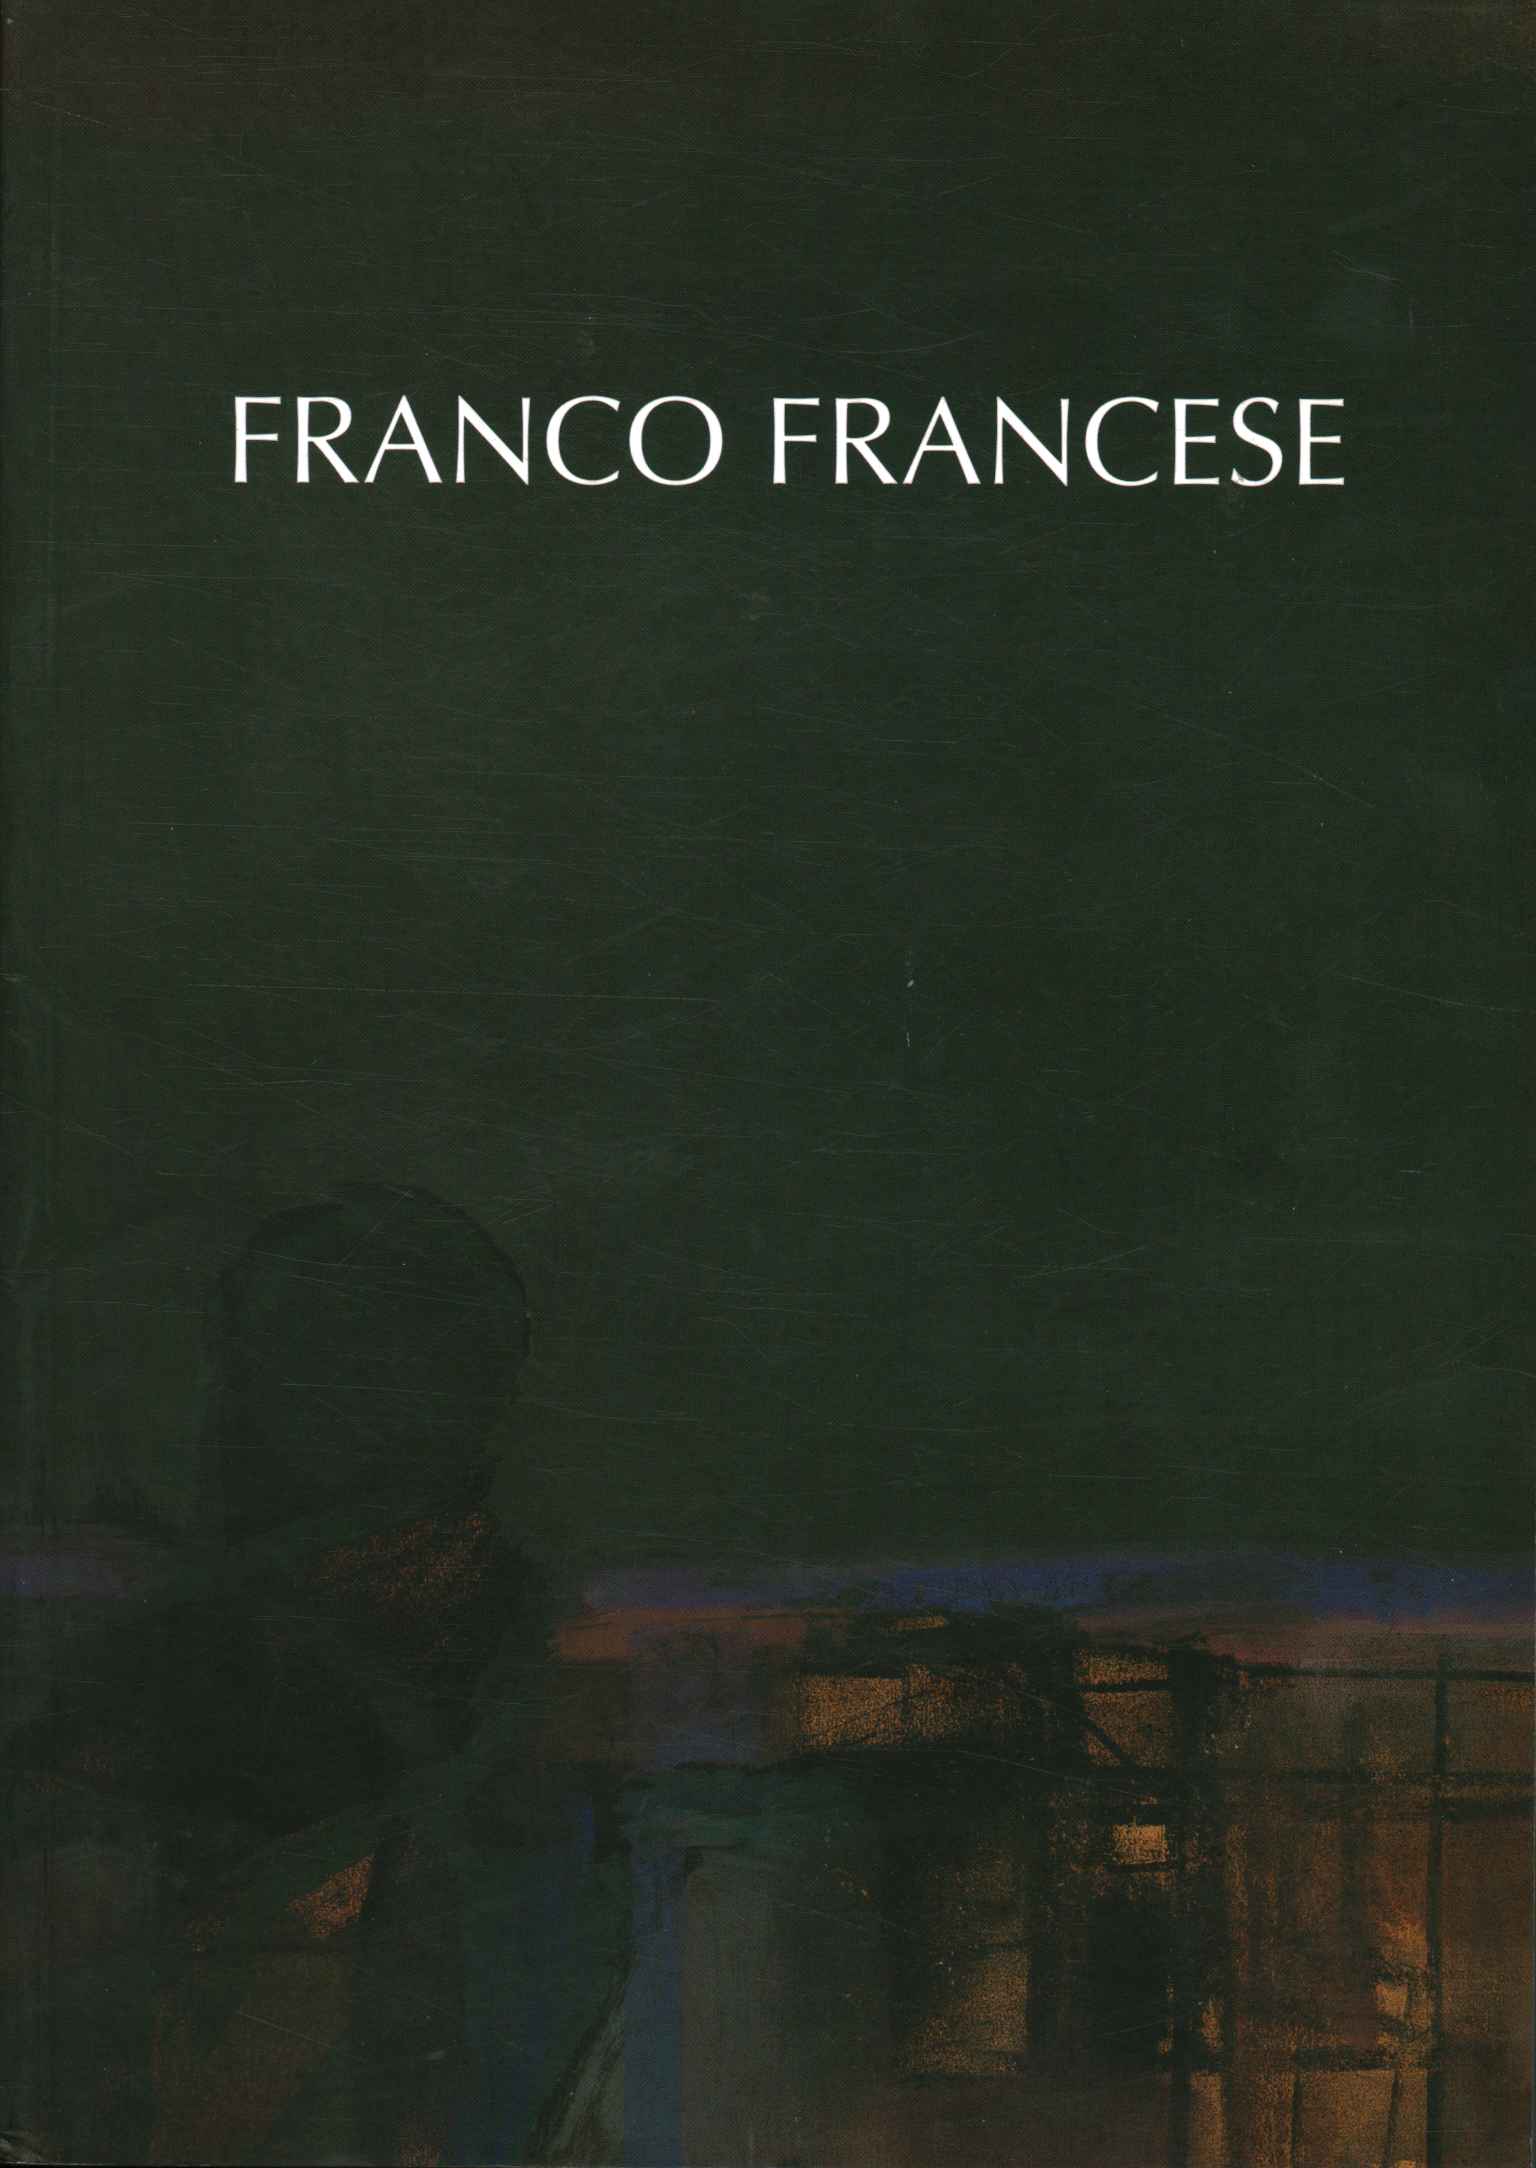 Franco French